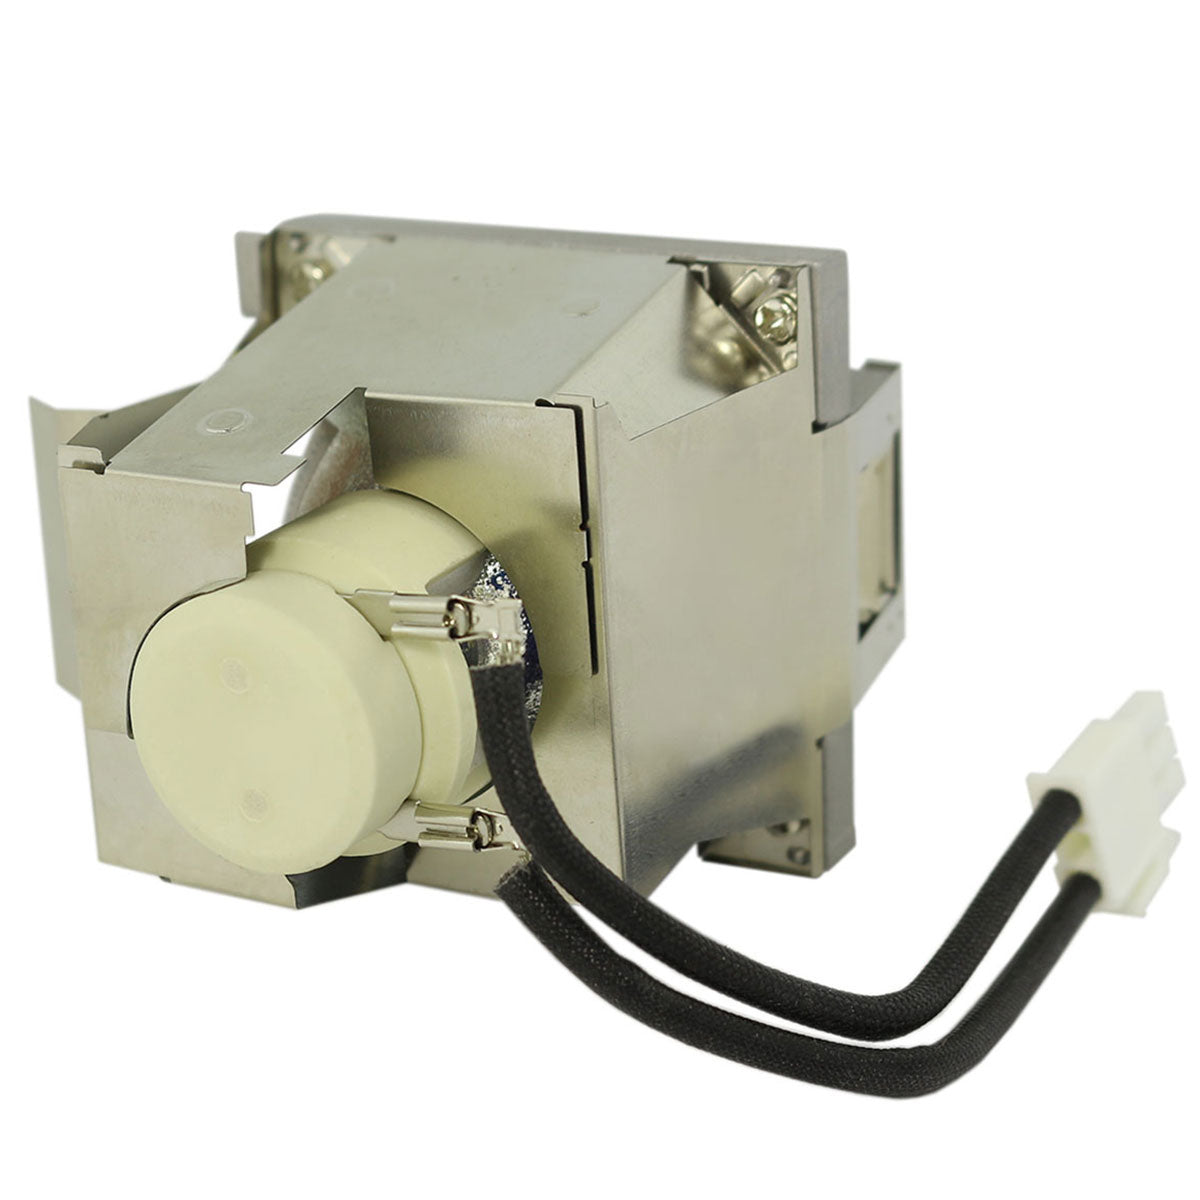 Viewsonic RLC-101 Compatible Projector Lamp Module